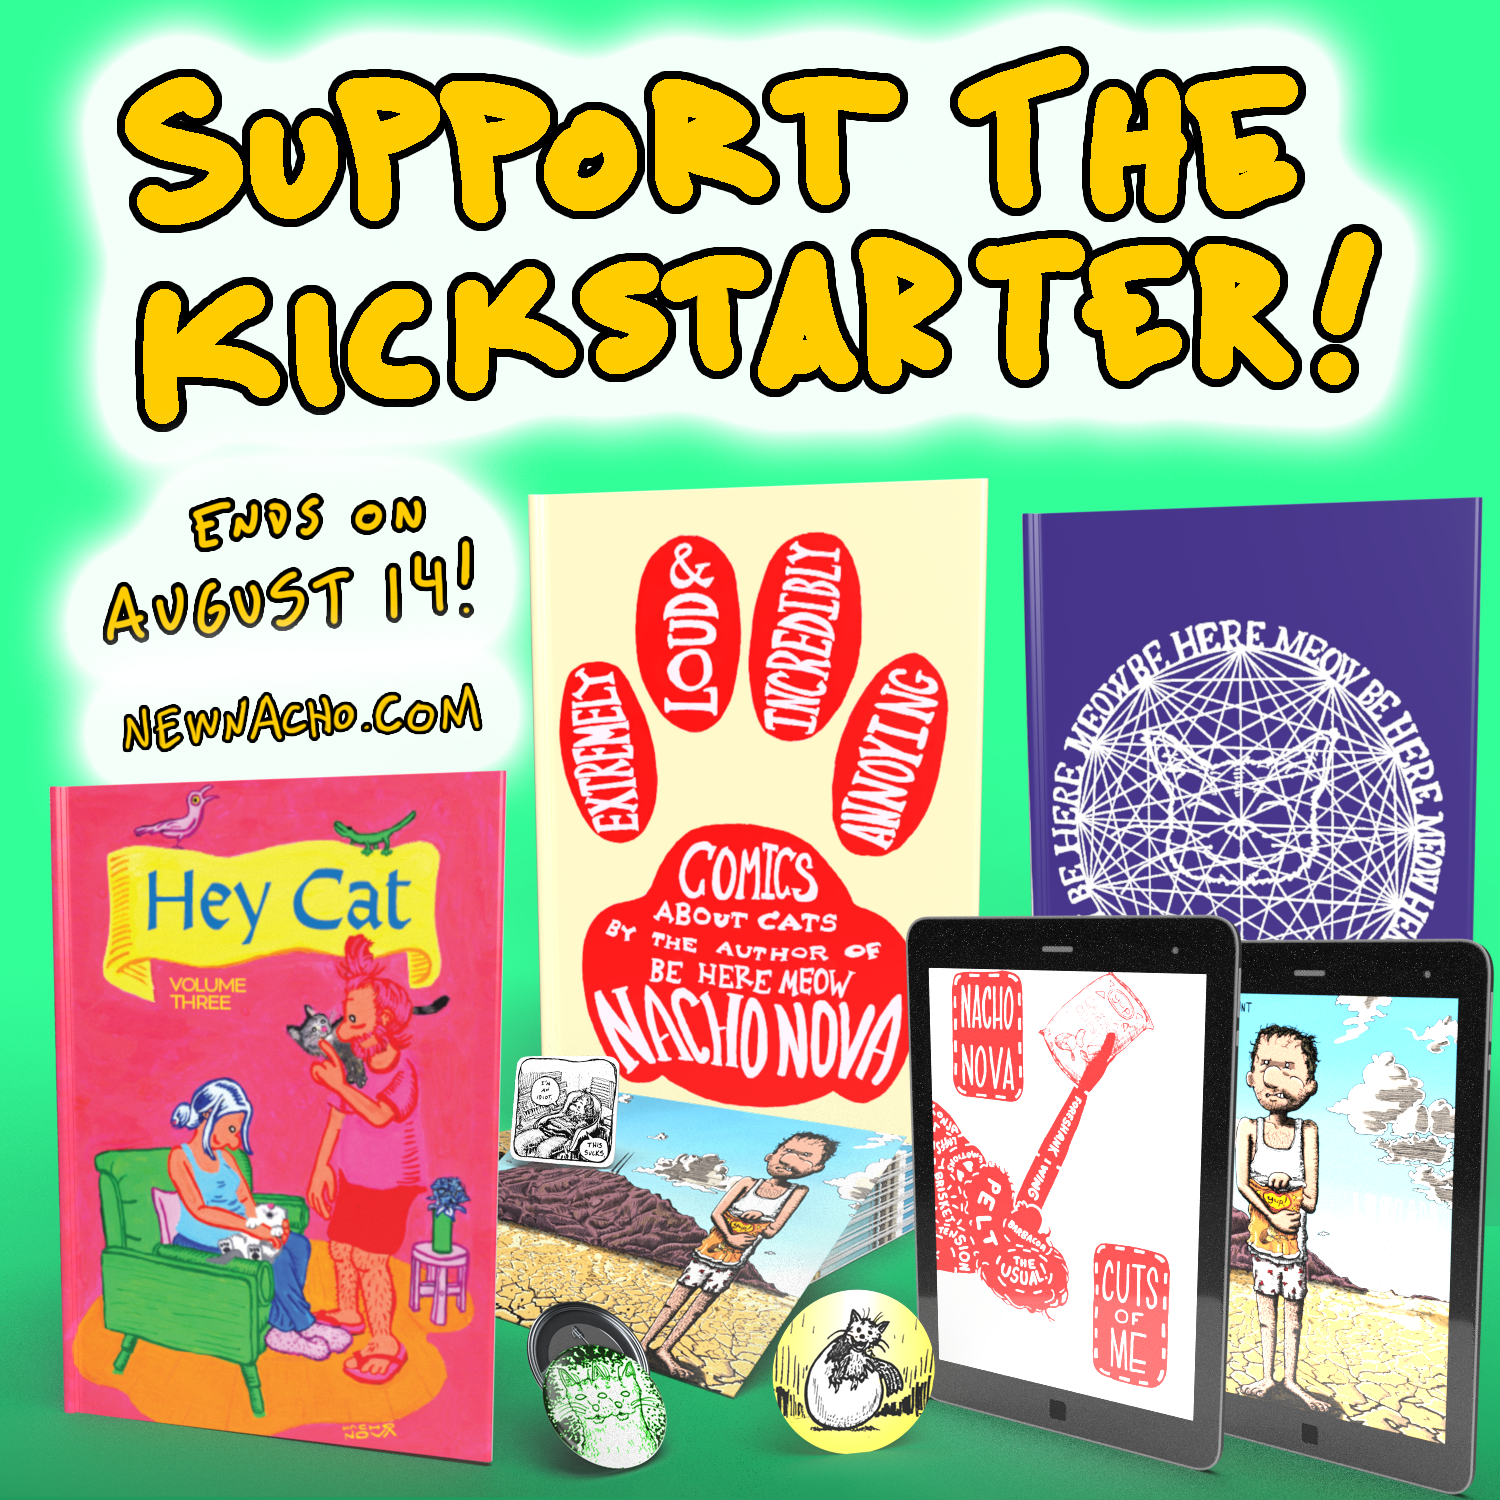 Hey Cat Volume 3 Now Live on Kickstarter!